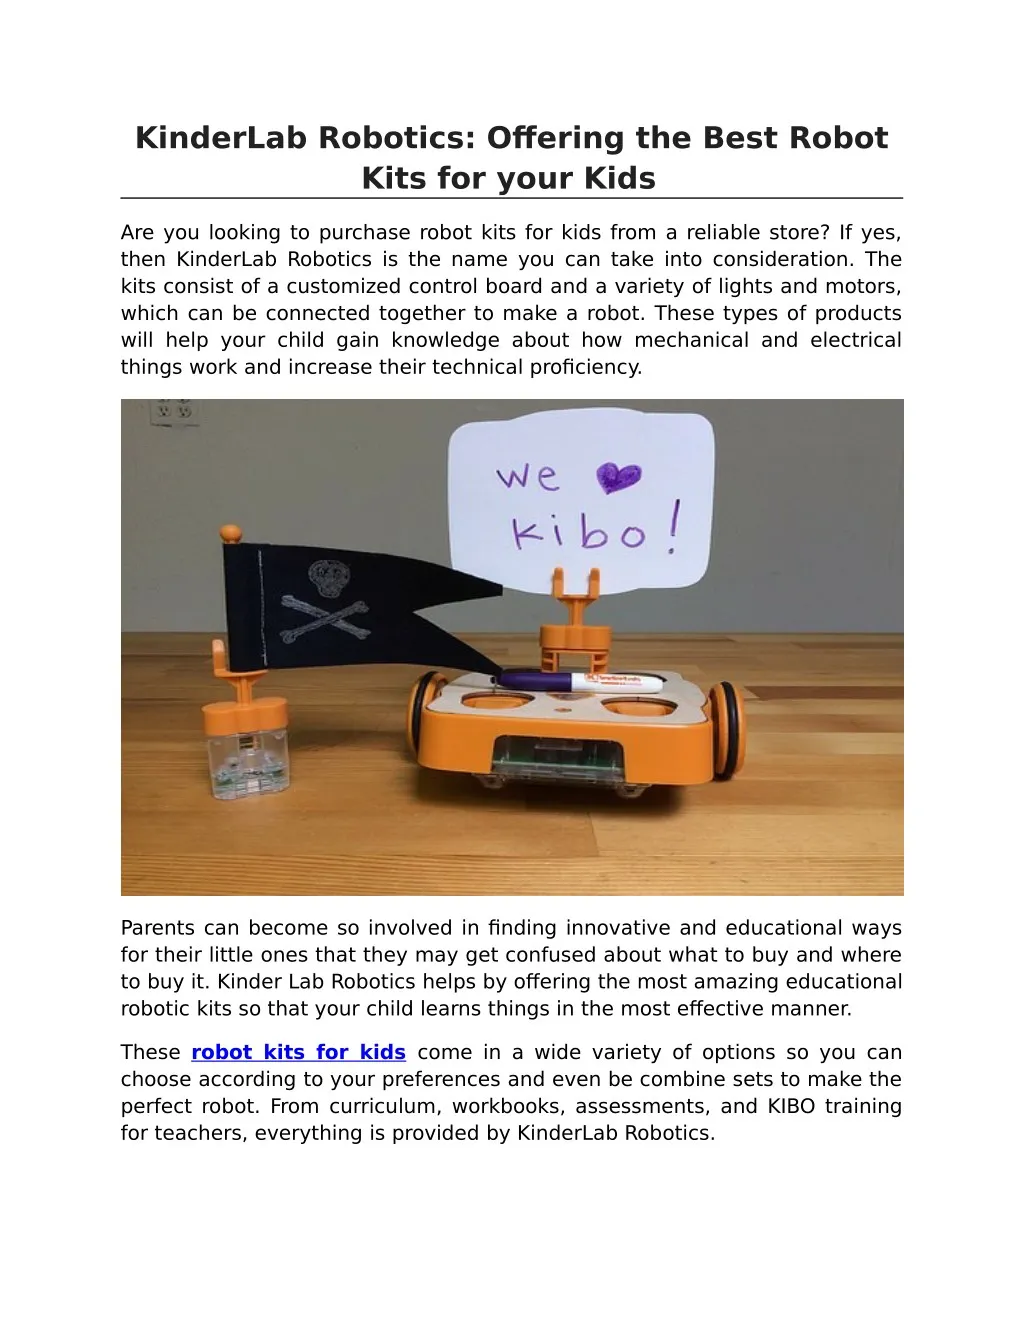 kinderlab robotics offering the best robot kits